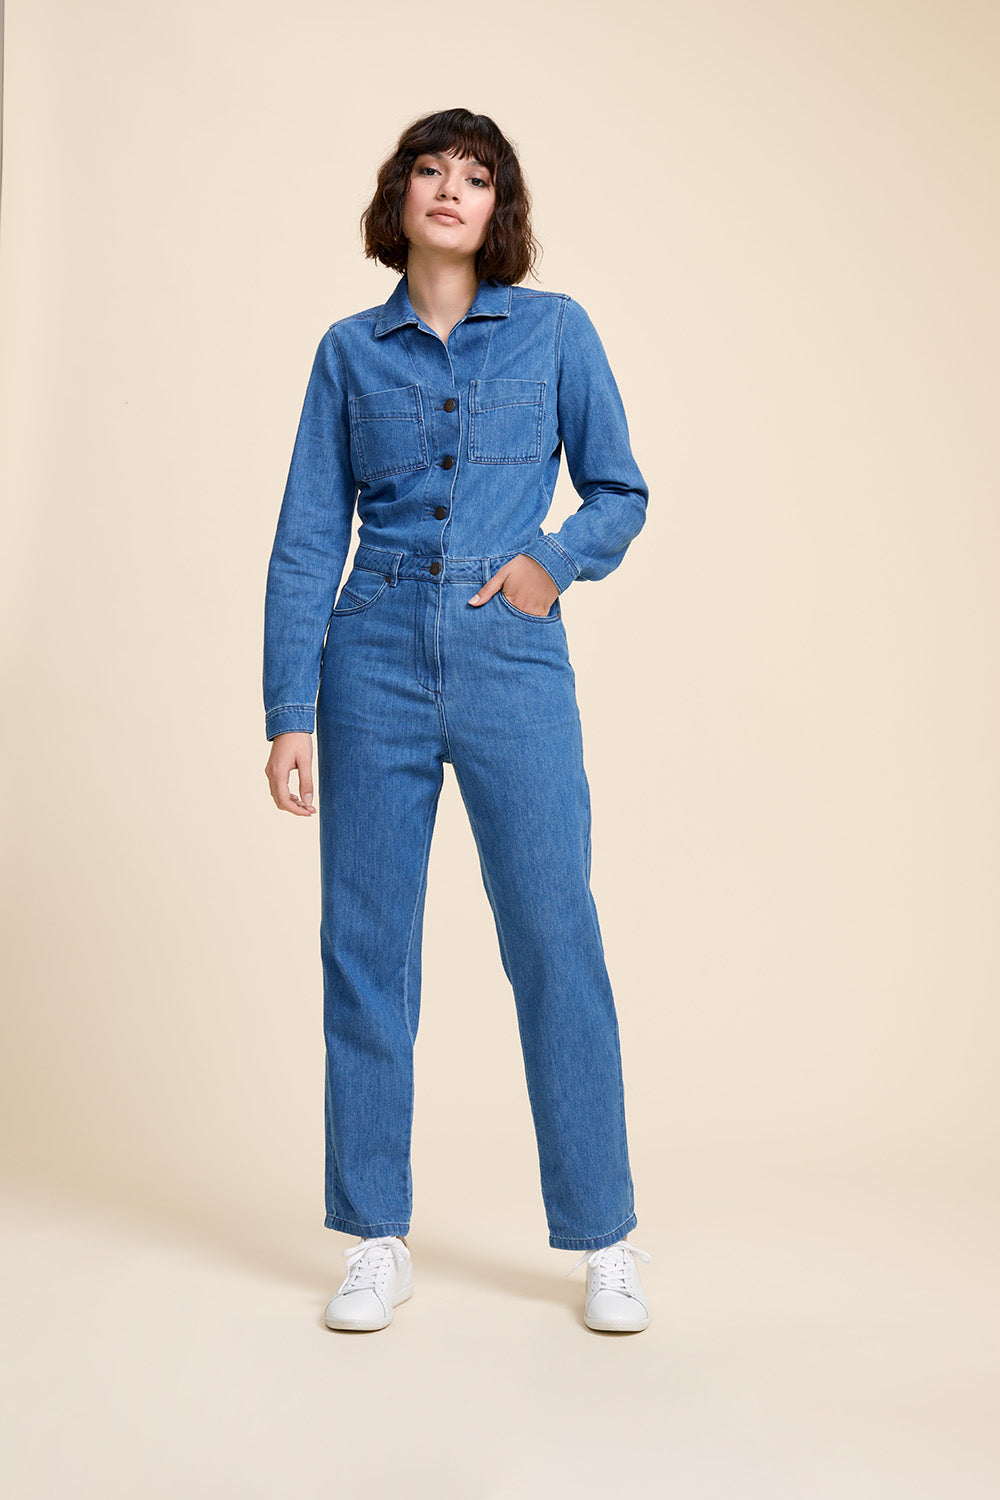 RORY - Combinaison en jean bleu